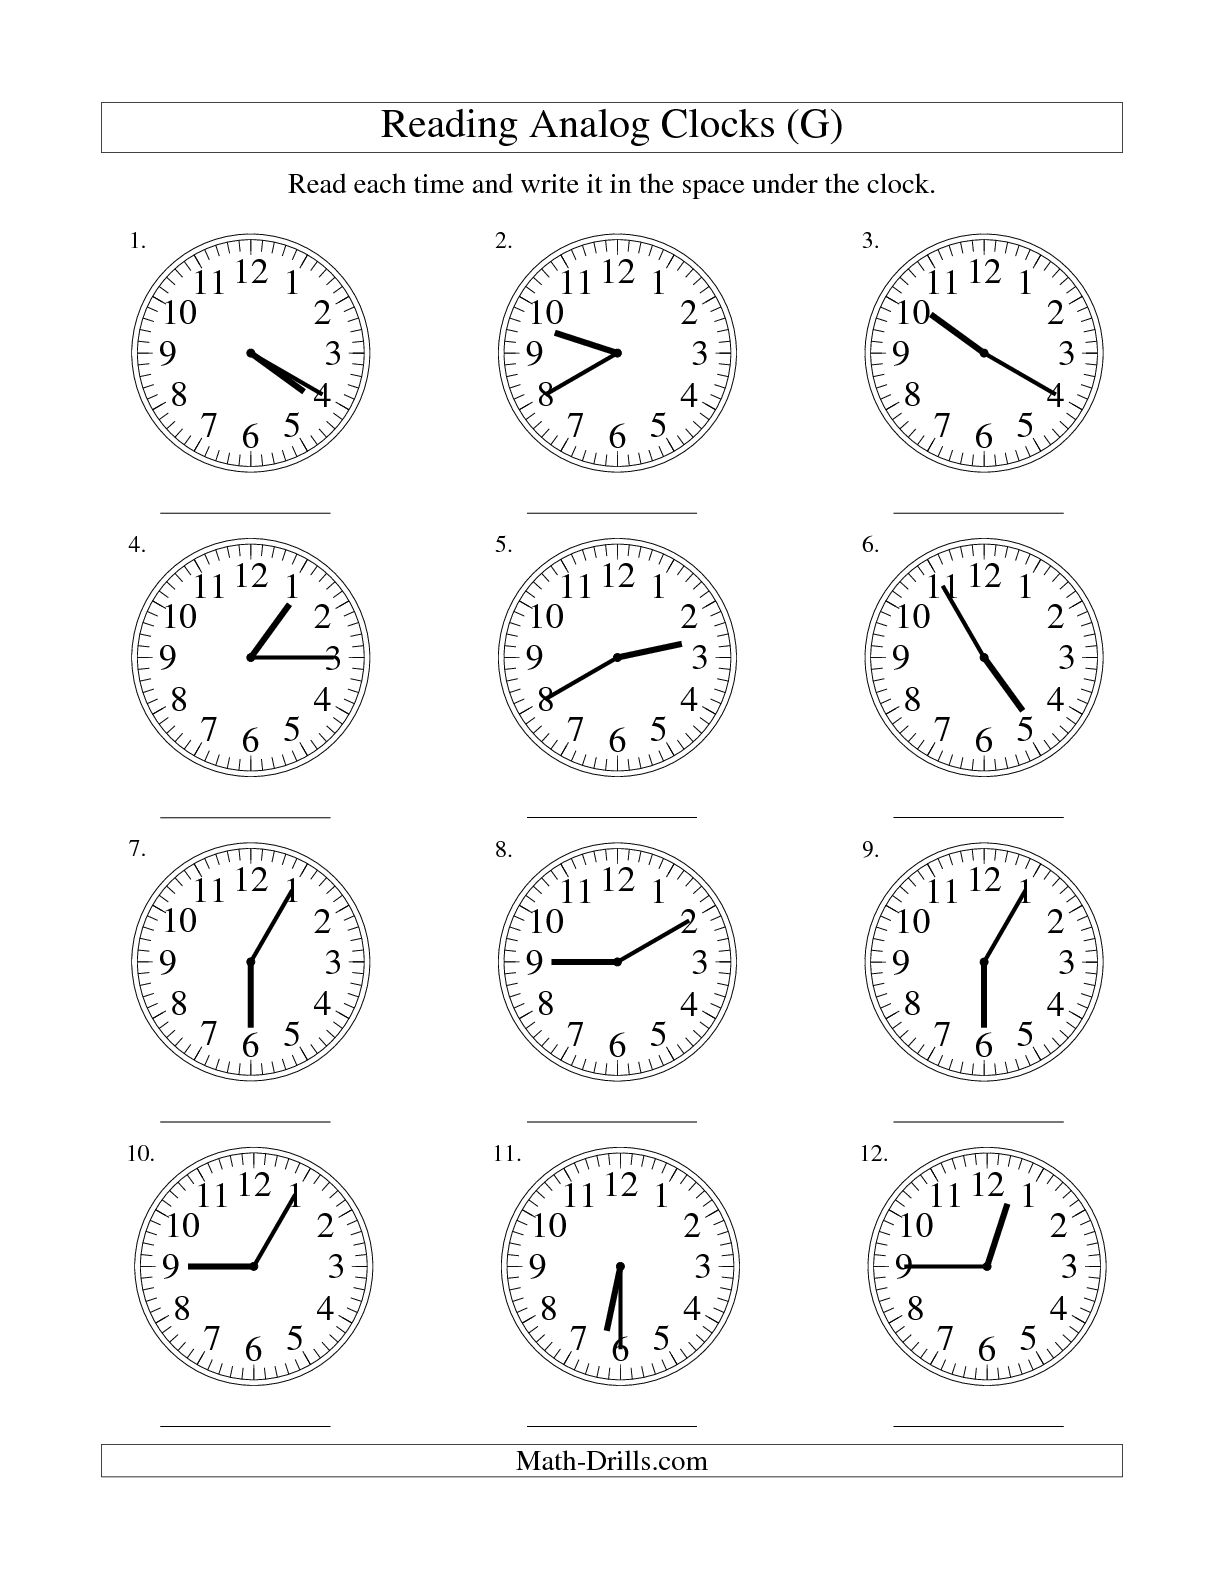 5 Minute Intervals Analog Clock Worksheet With Image